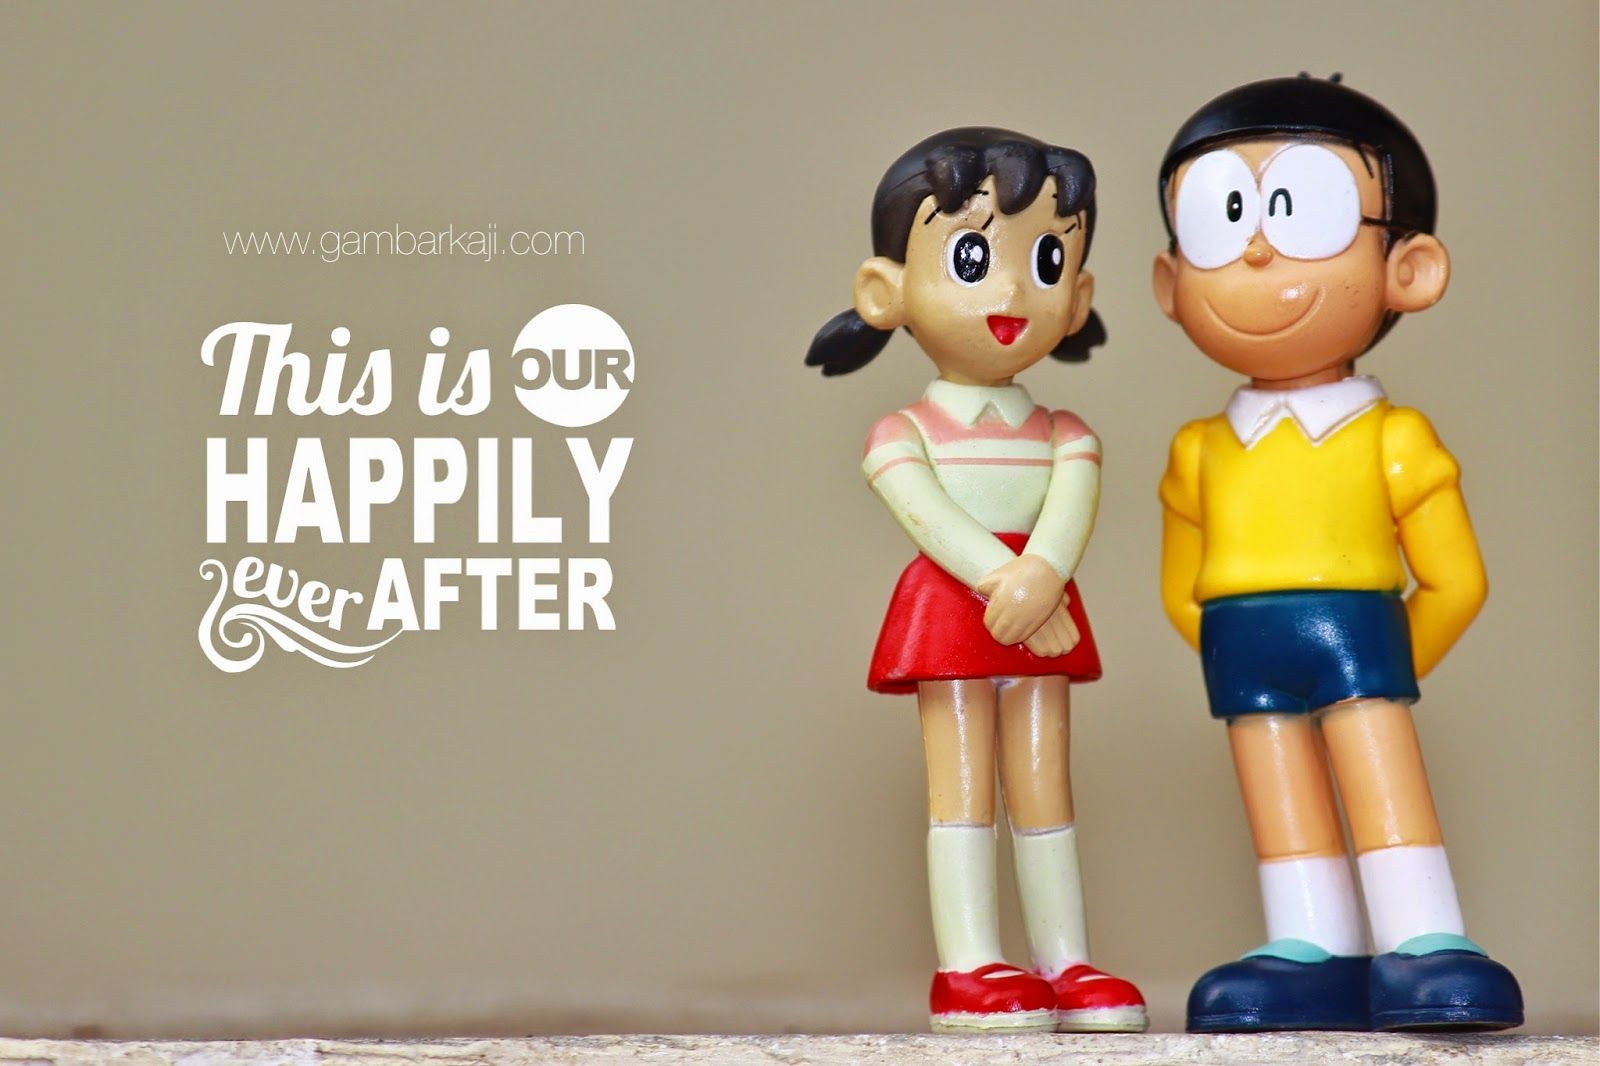 nobita shizuka love wallpapers,jouet,dessin animé,figurine,dessin animé,figurine